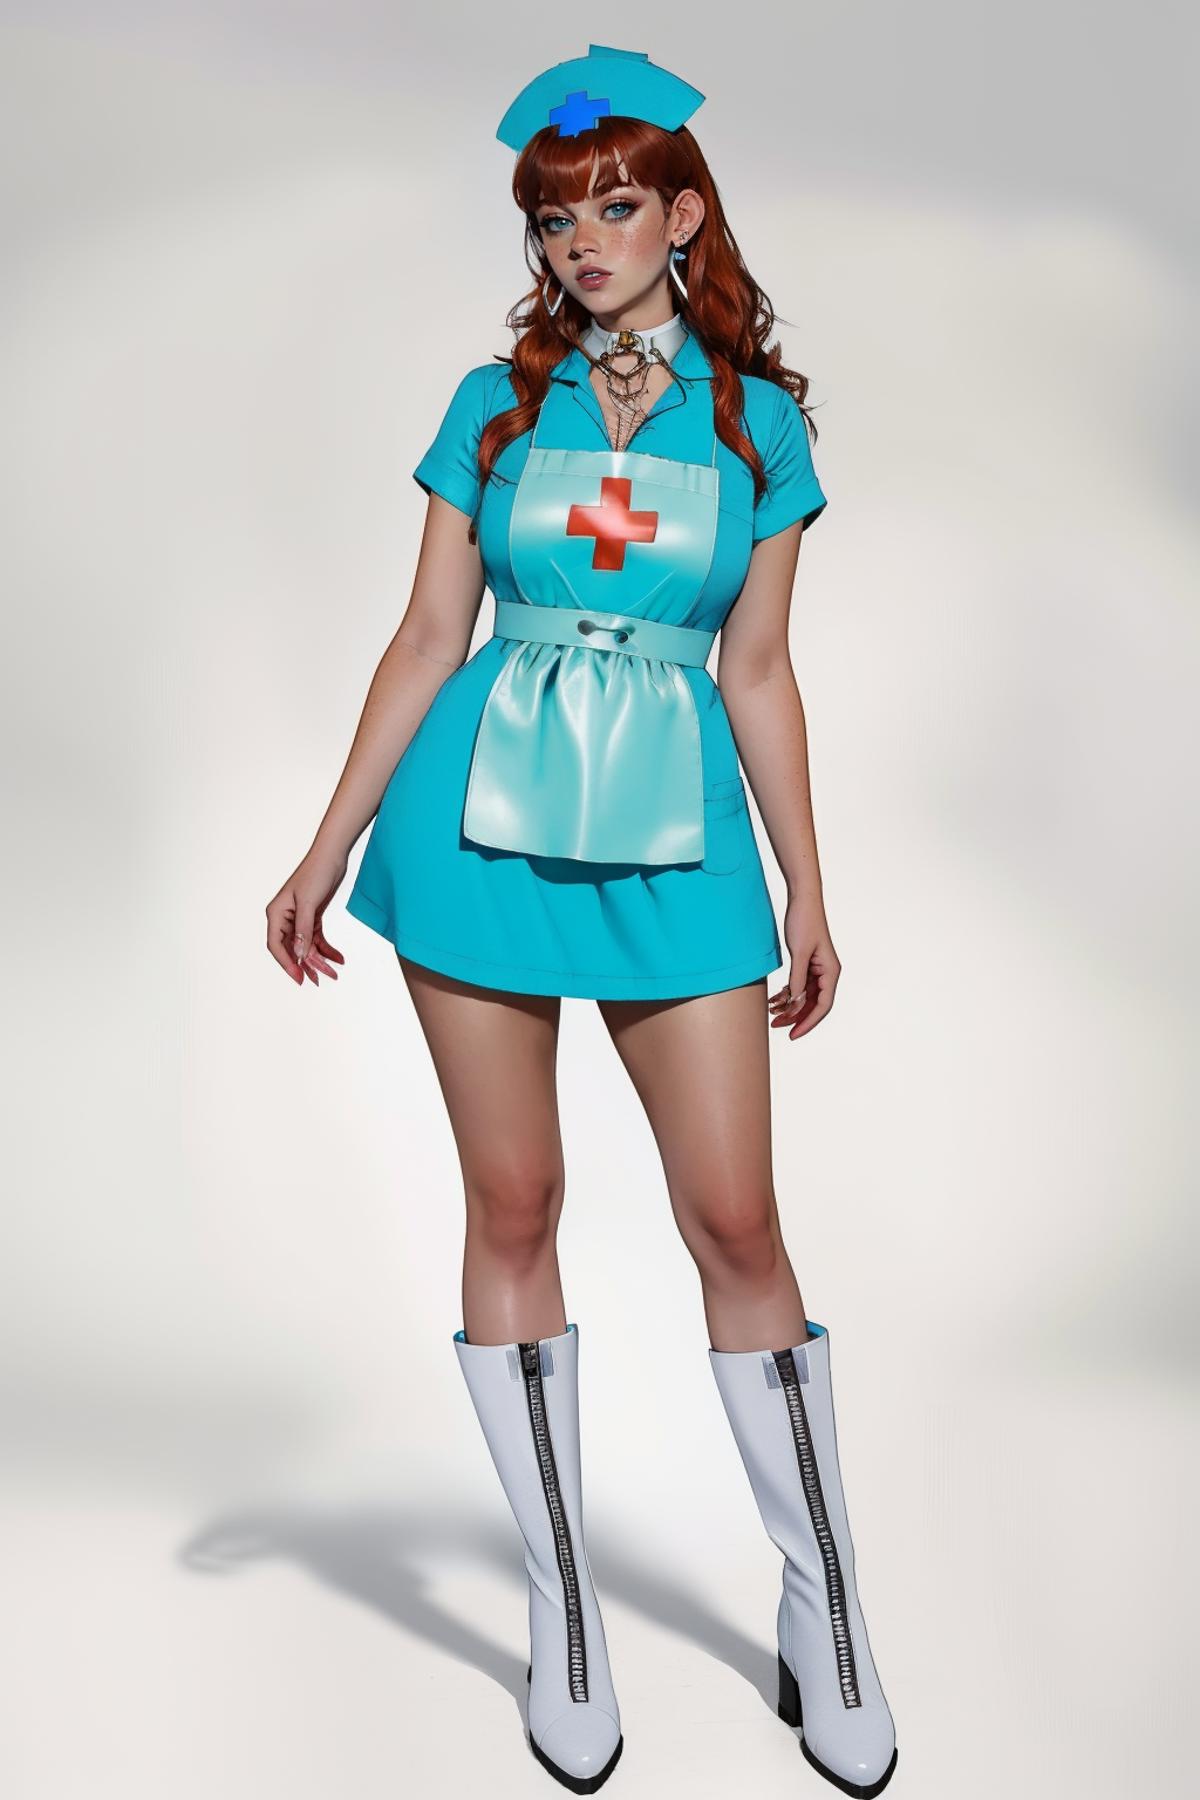 Short Blue Nurse Dress image by freckledvixon